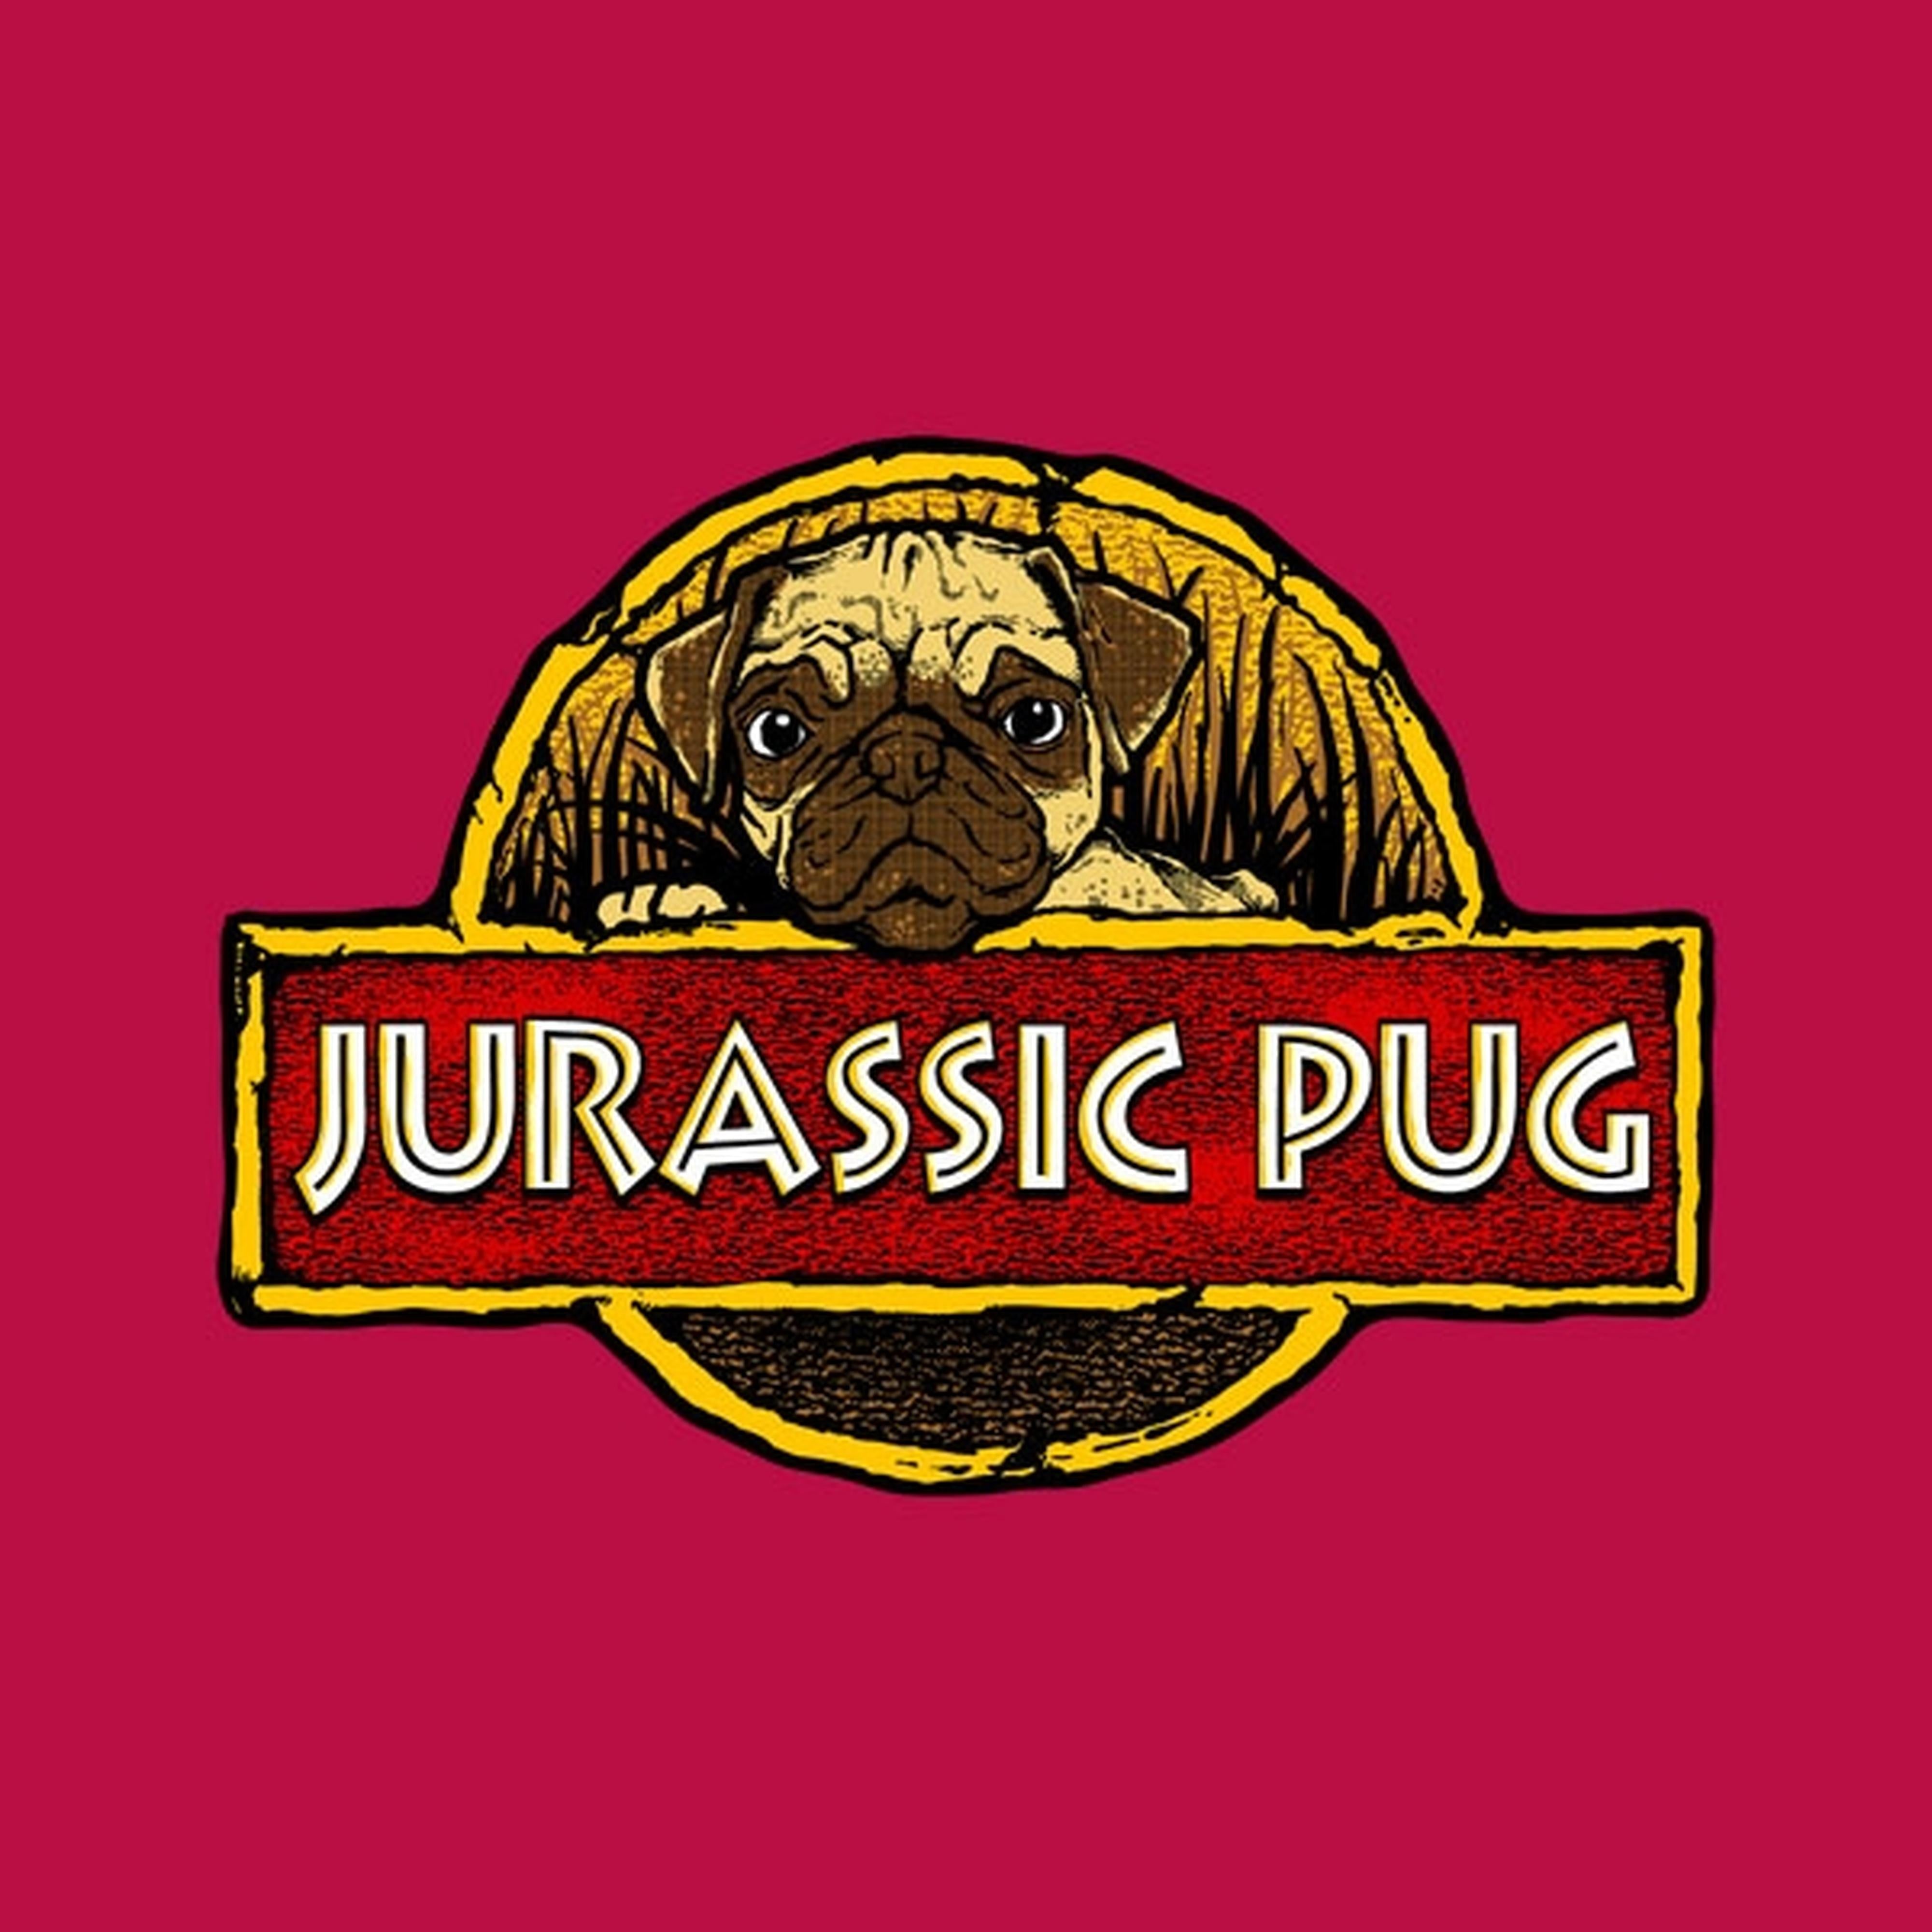 Jurassic pug - T-shirt